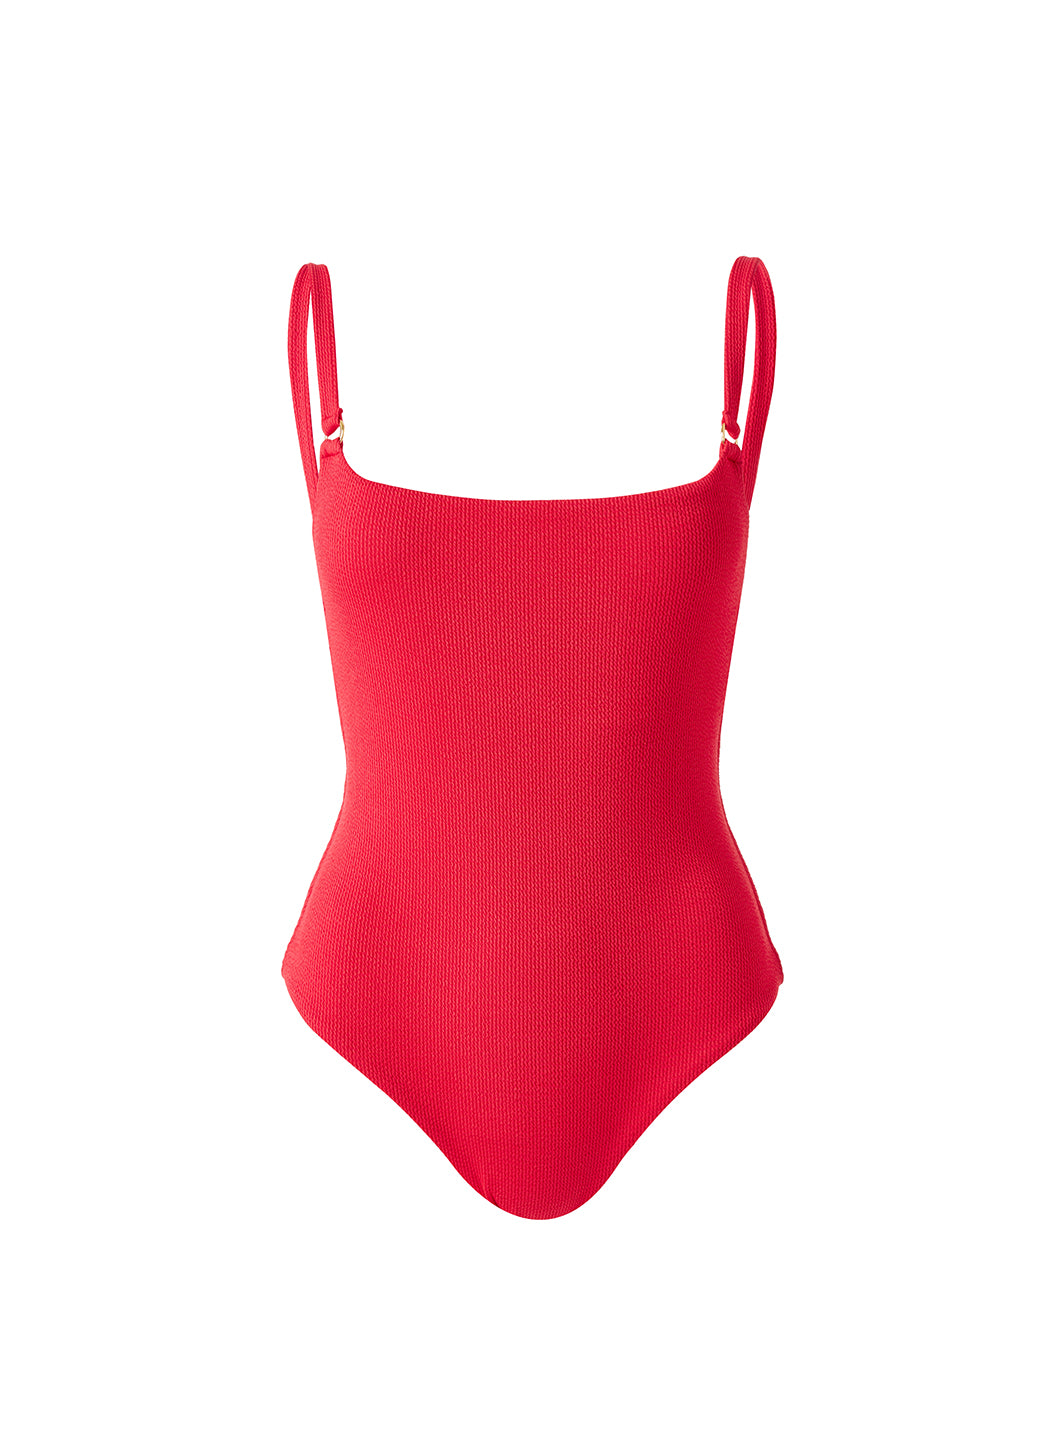 Tosca_Red_Ridges_Swimsuit_Cutout